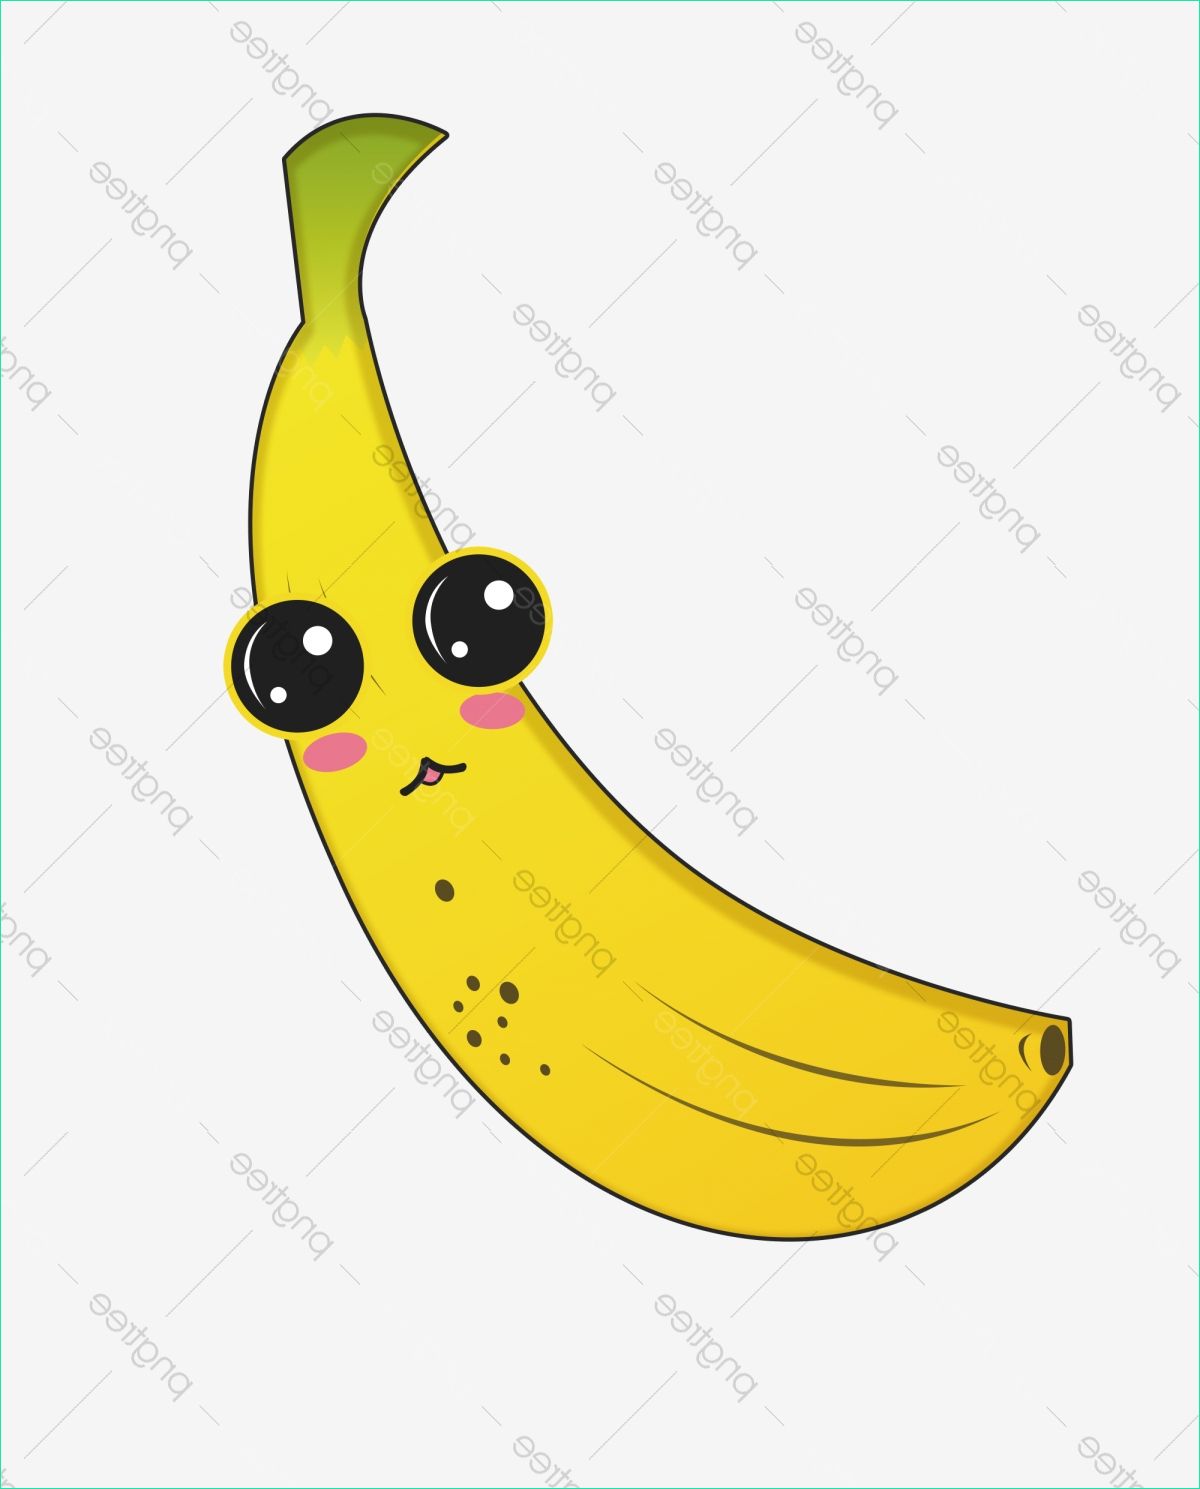 banane de dessin anime banane nourriture dete ete banane de interieur dessiner une banane